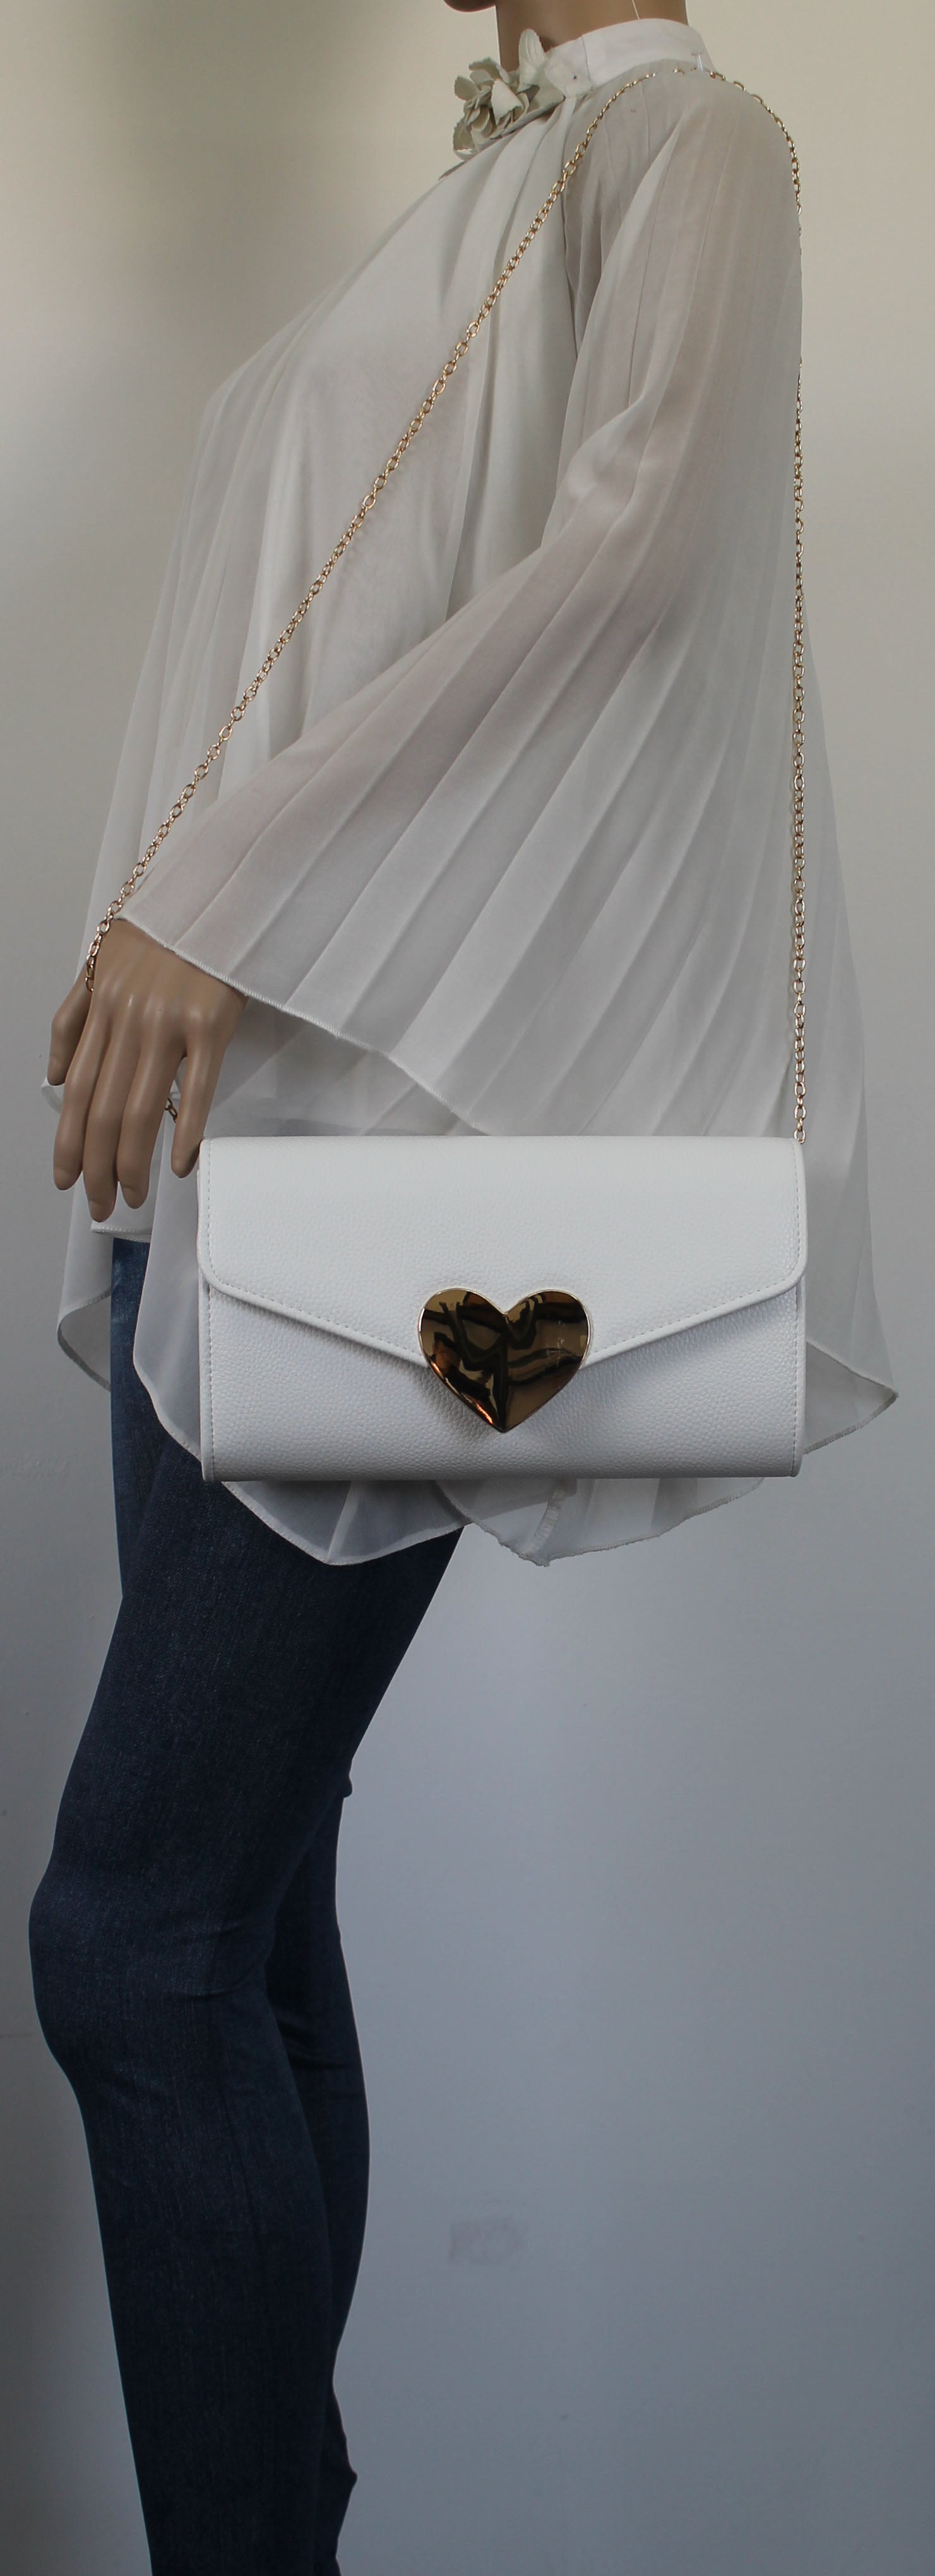 SWANKYSWANS Corrie Heart Clutch Bag White Cute Cheap Clutch Bag For Weddings School and Work